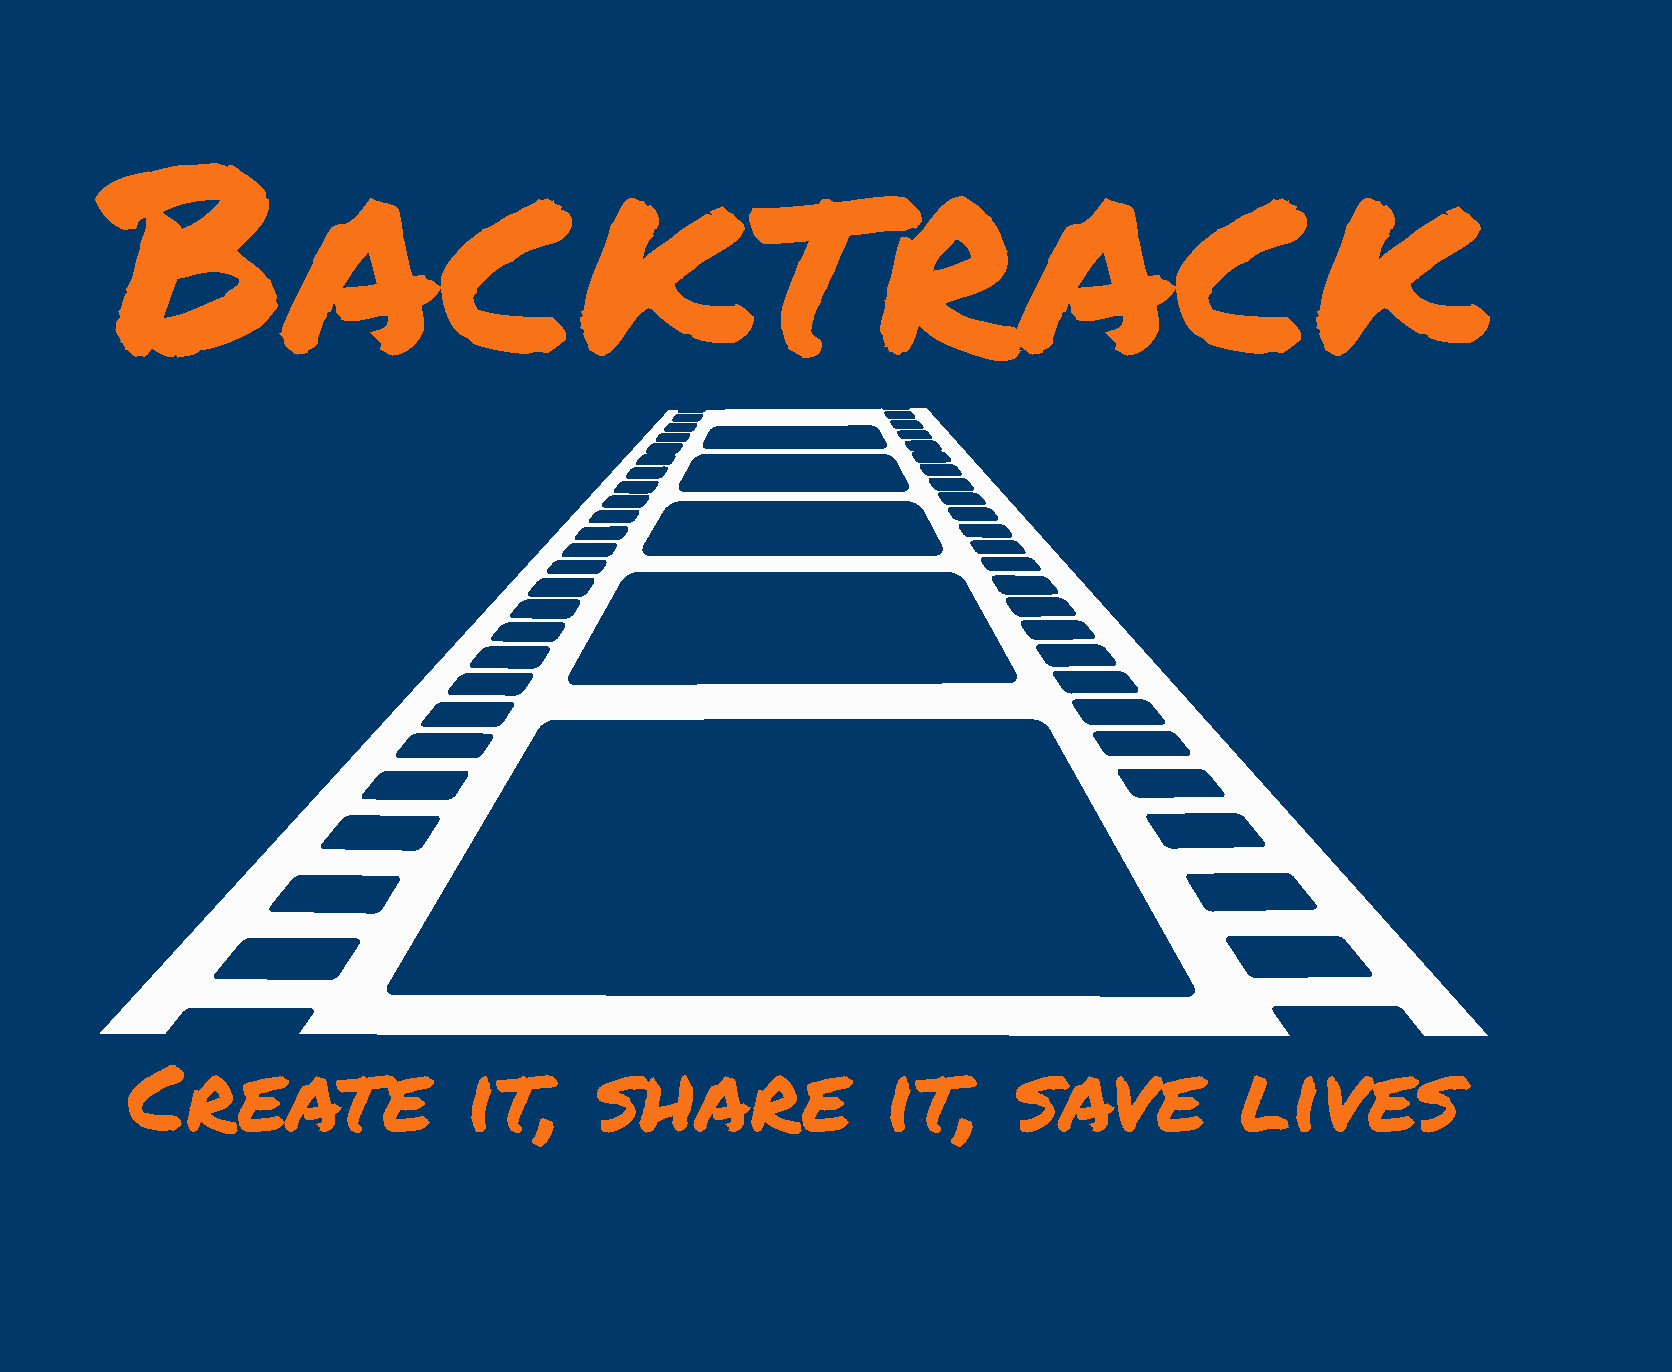 Backtrack logo